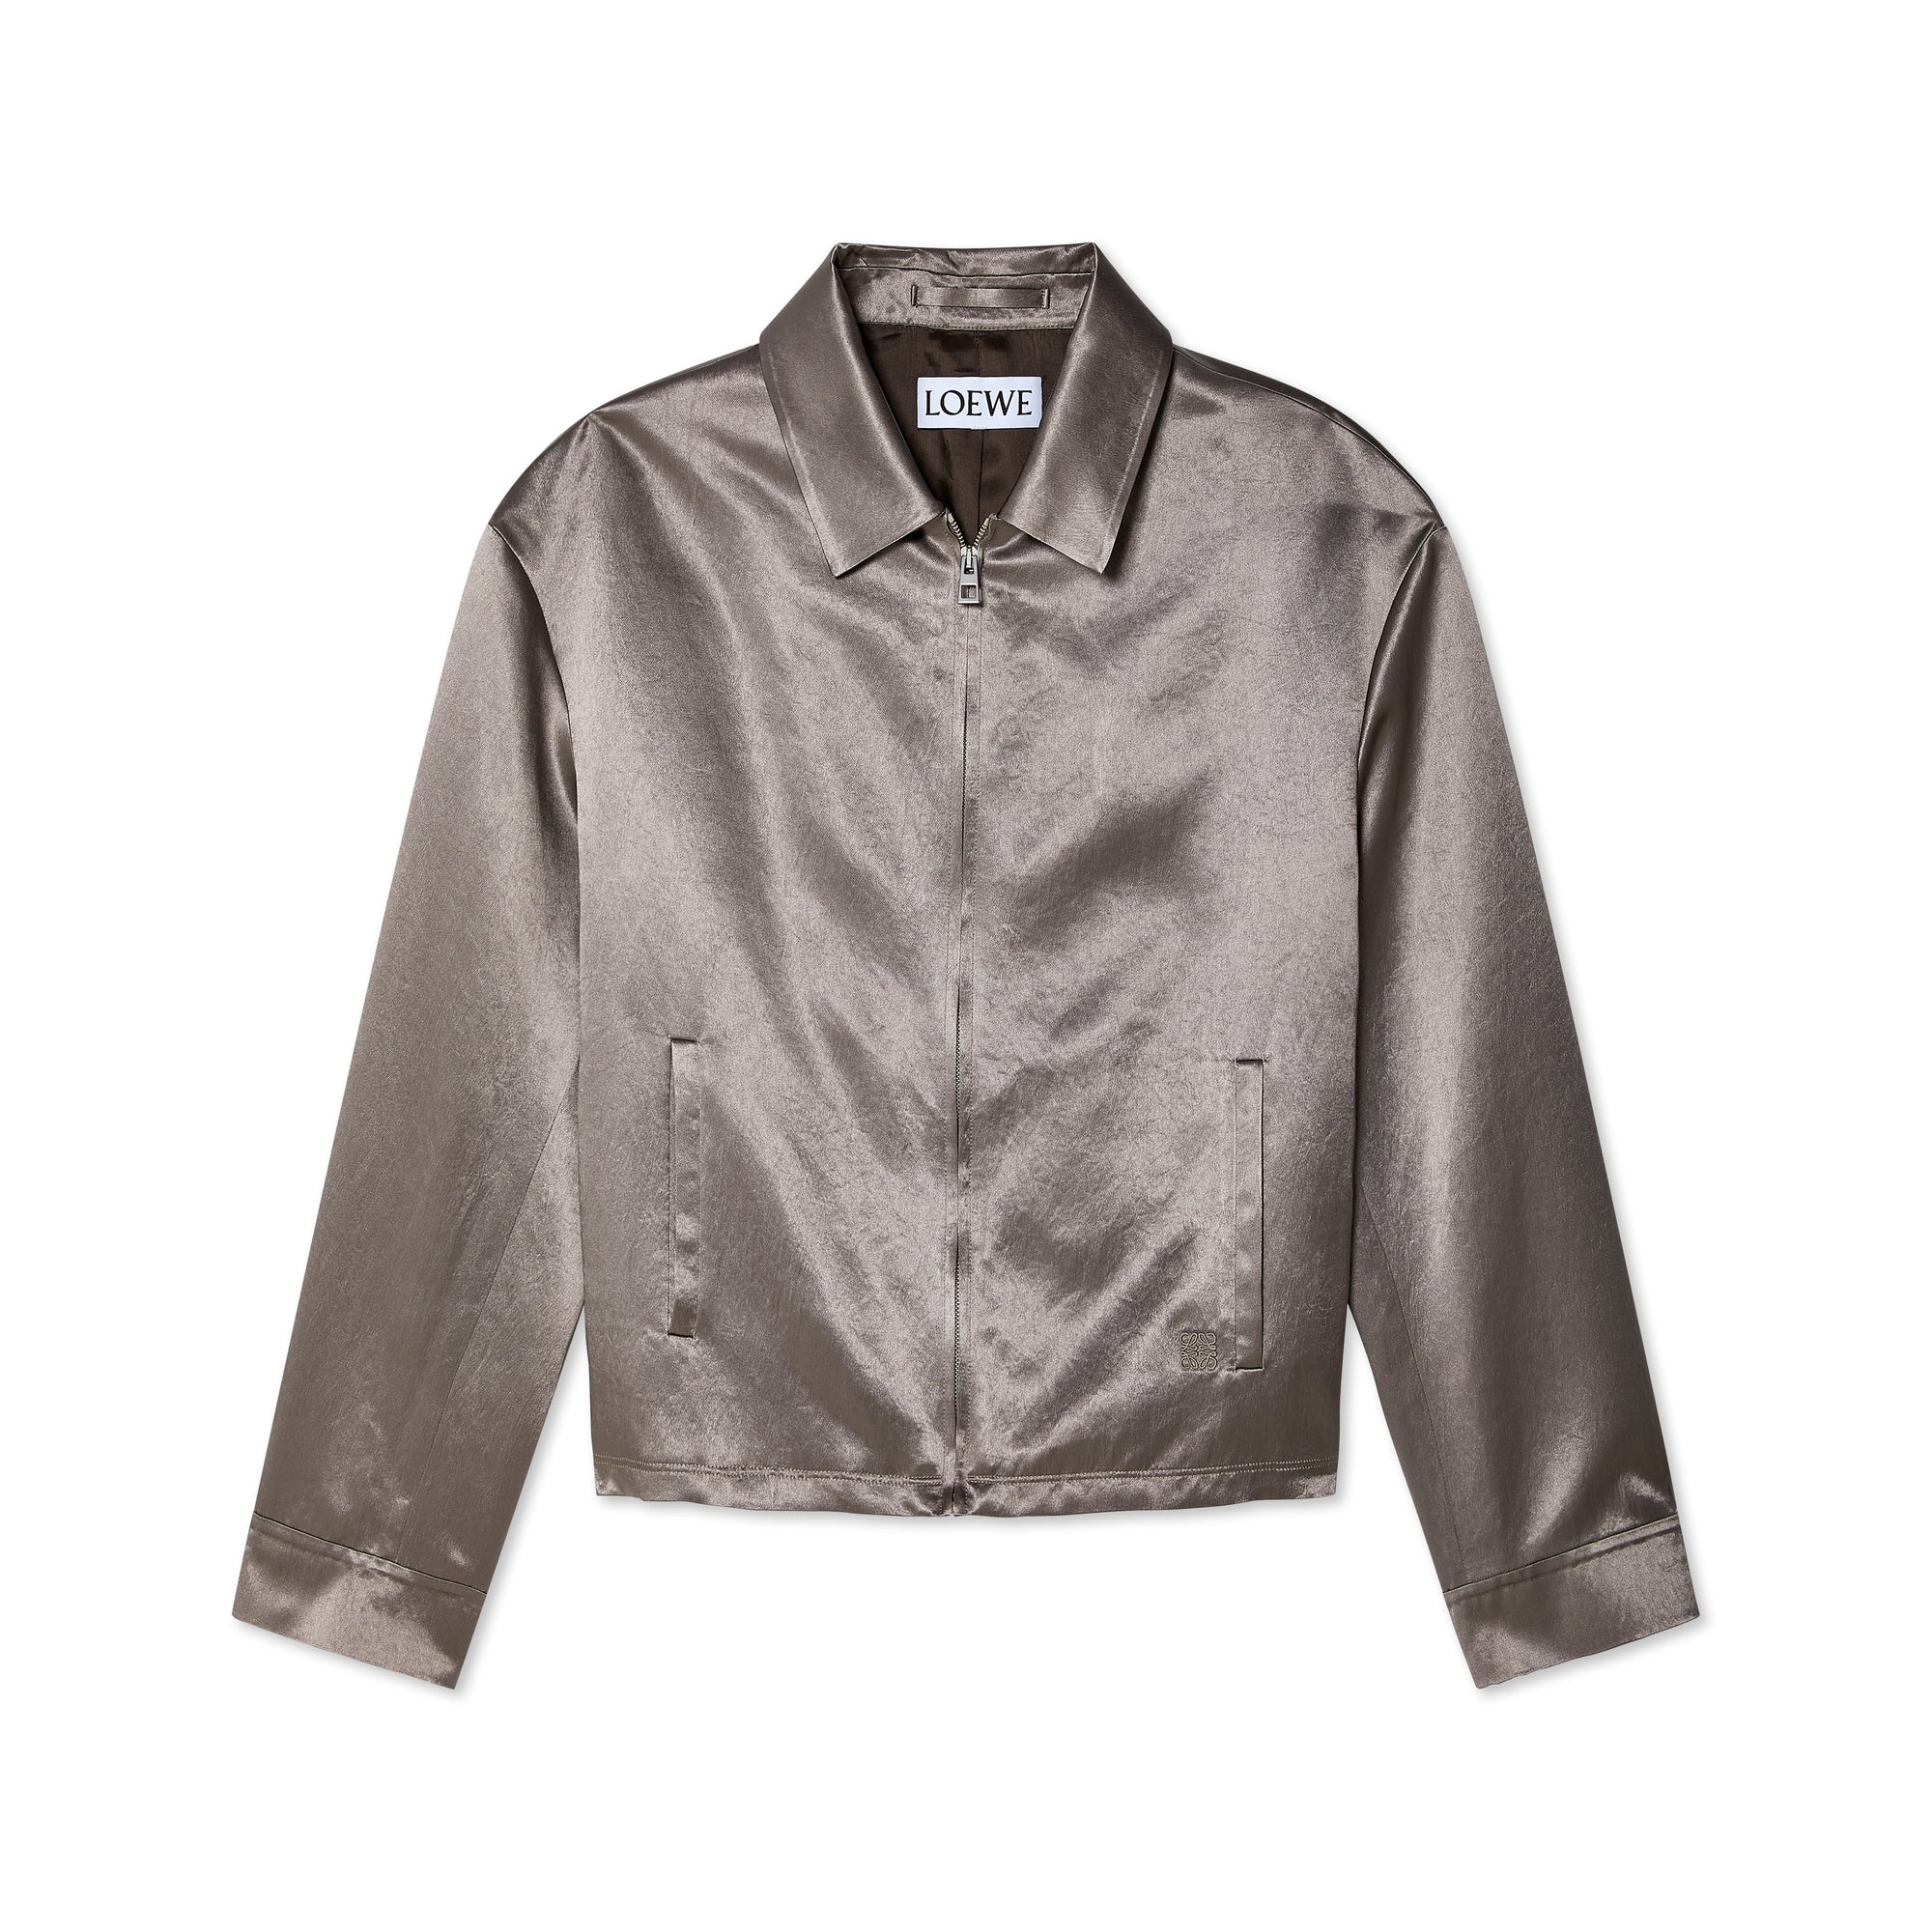 Loewe - Women's Jacket - (Grey) view 1